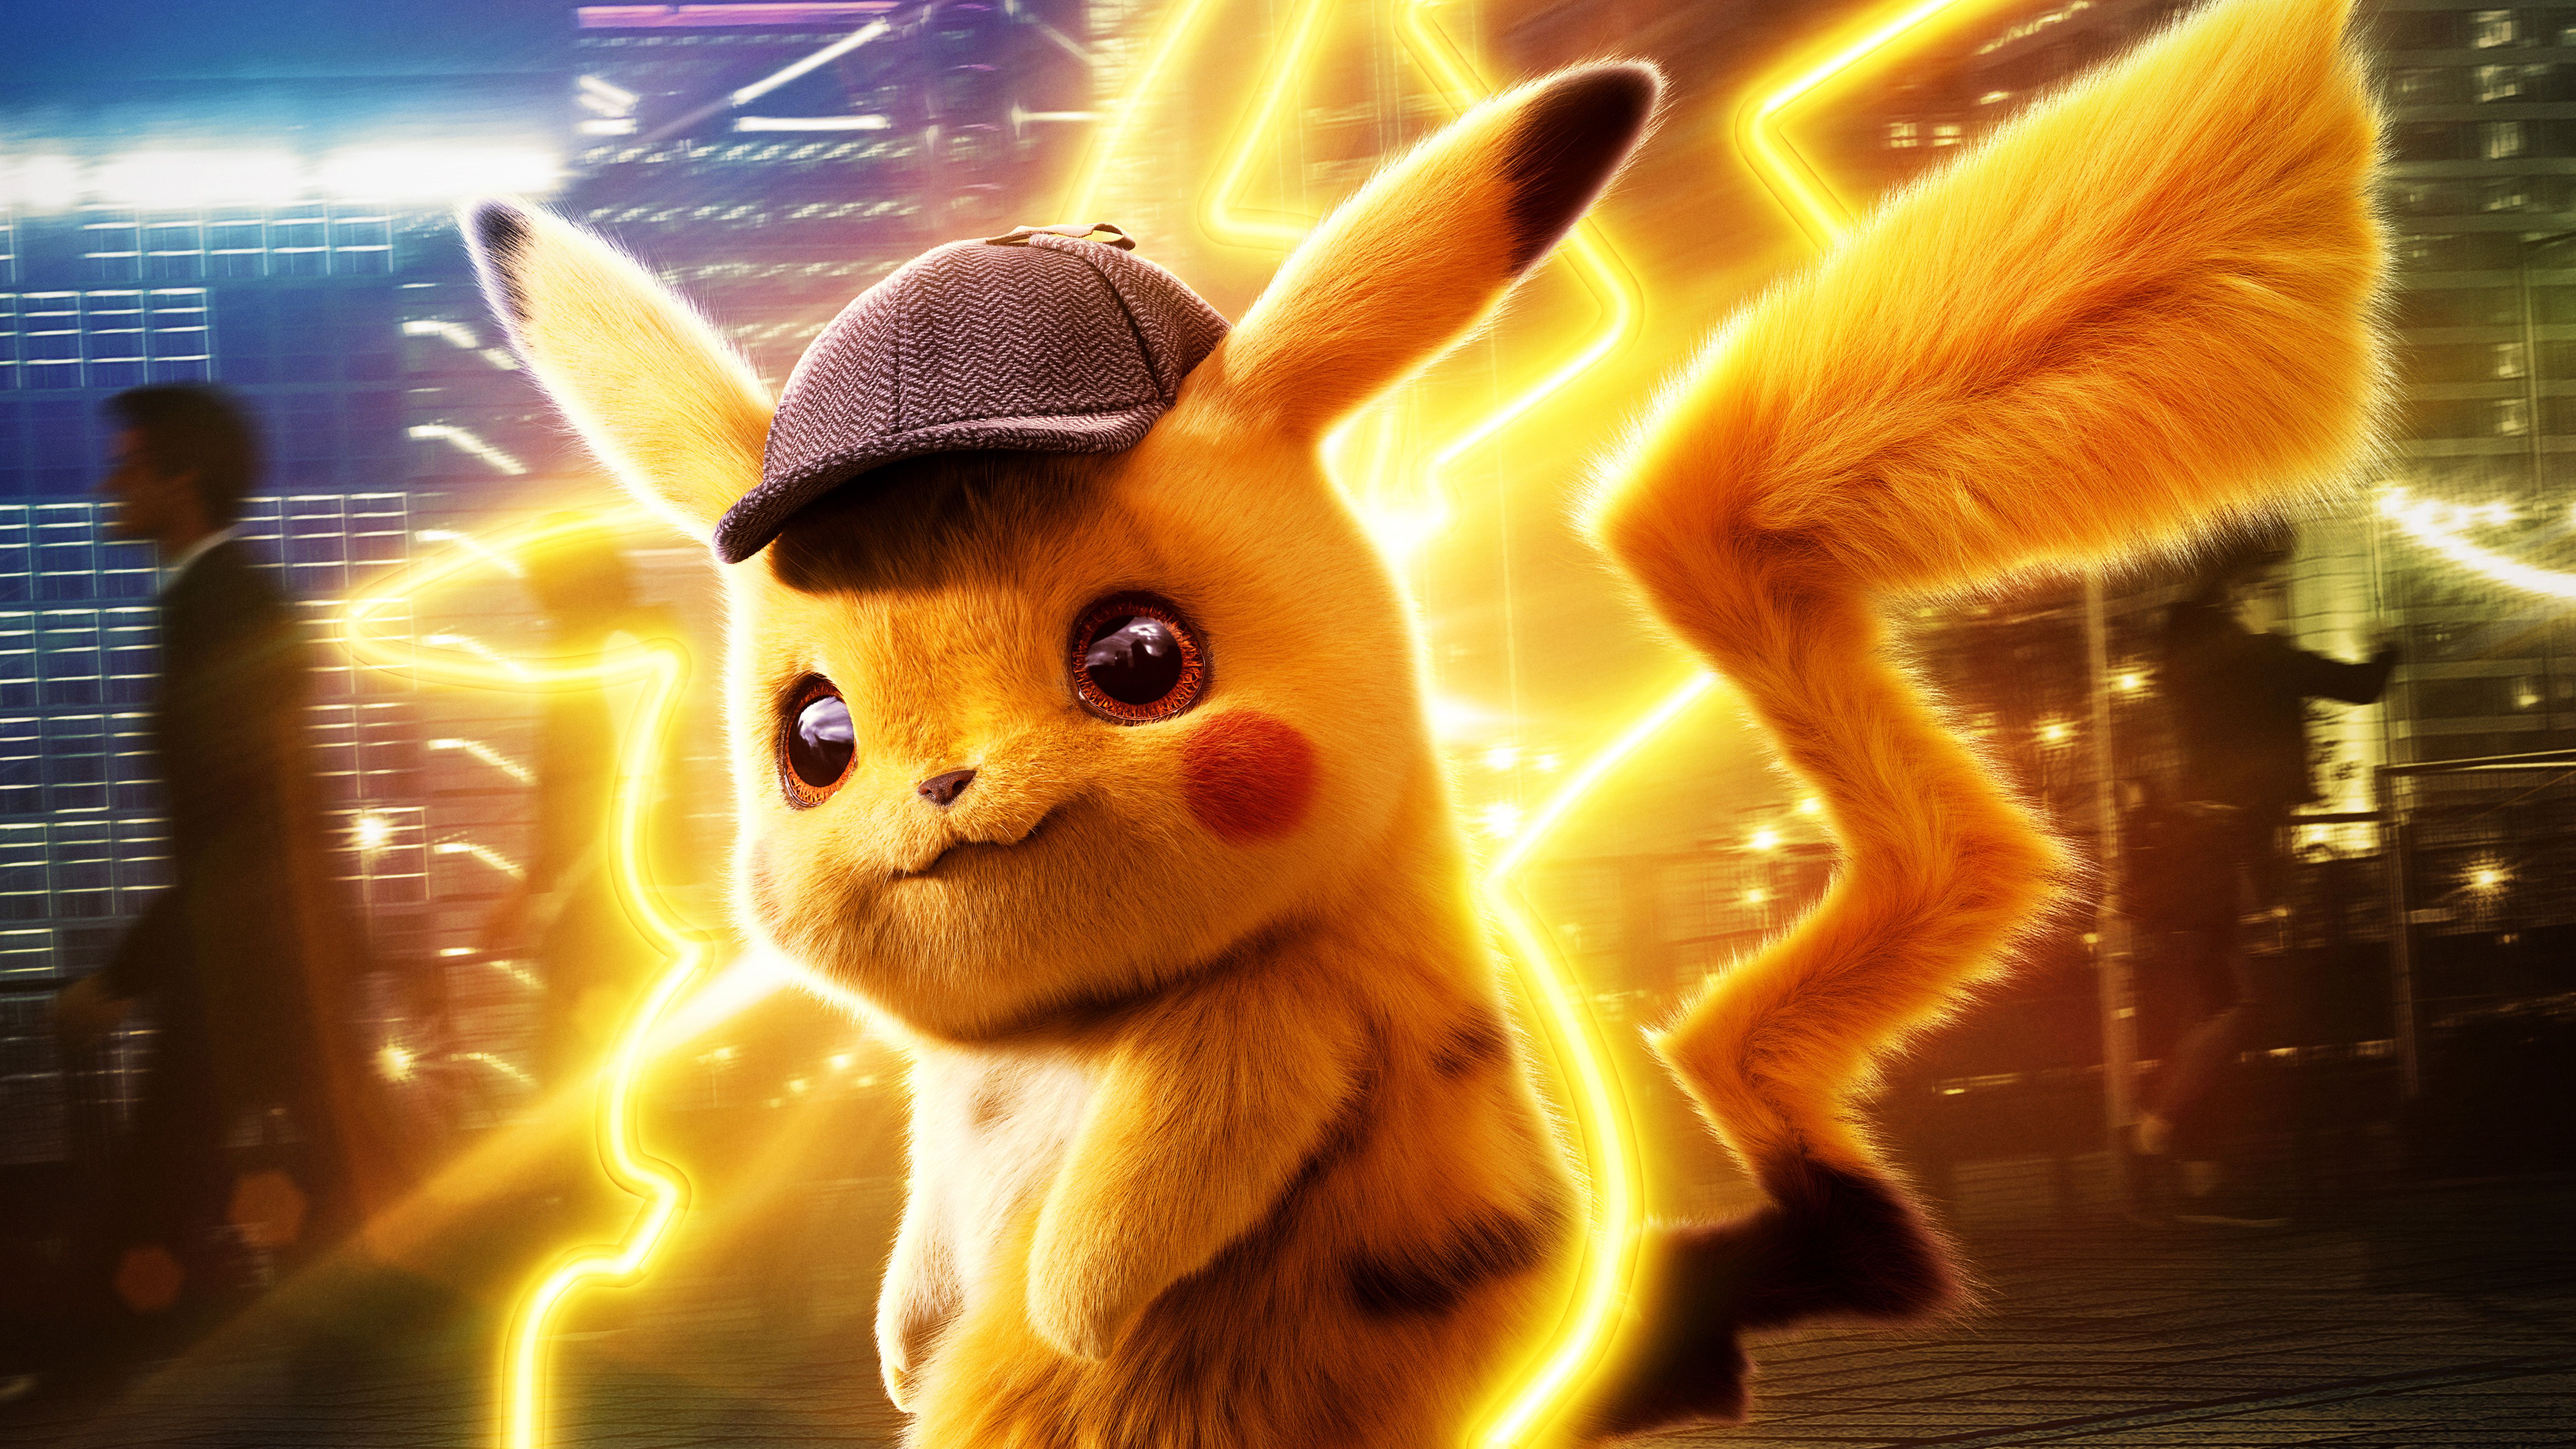 Pokémon Detective Pikachu HD Wallpaper and Background